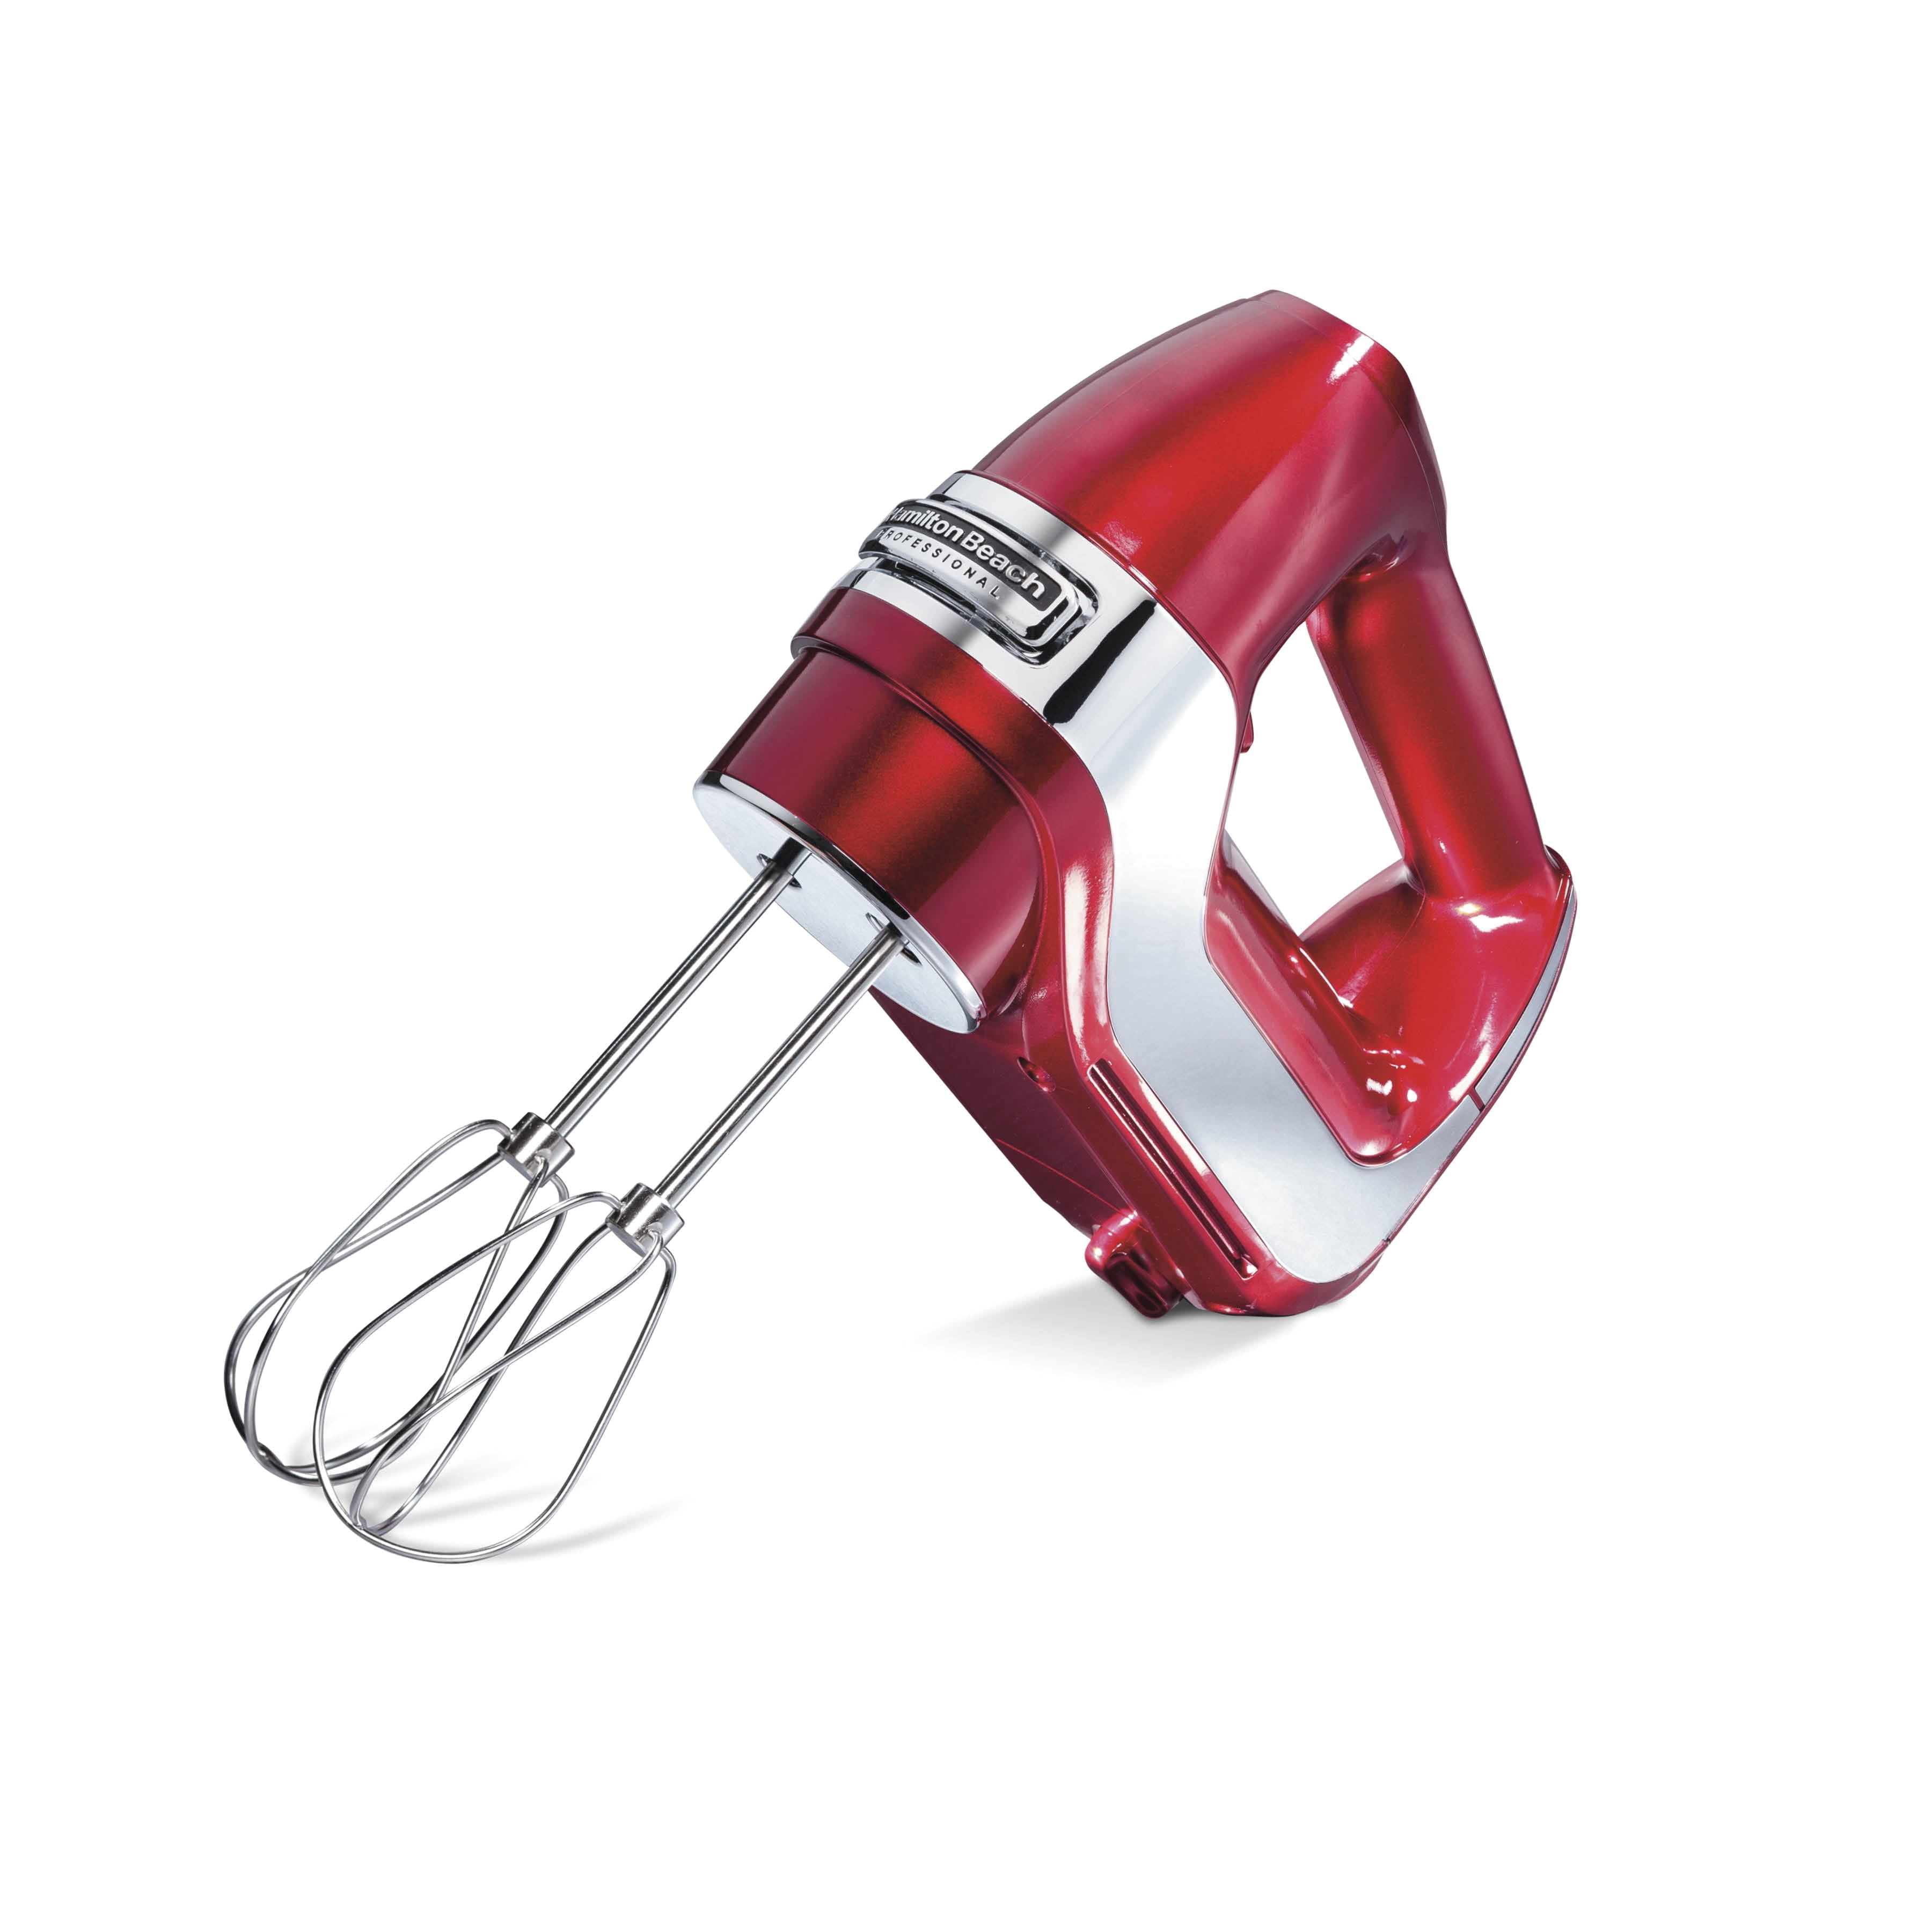 Italian-Made Hand Mixer - Red